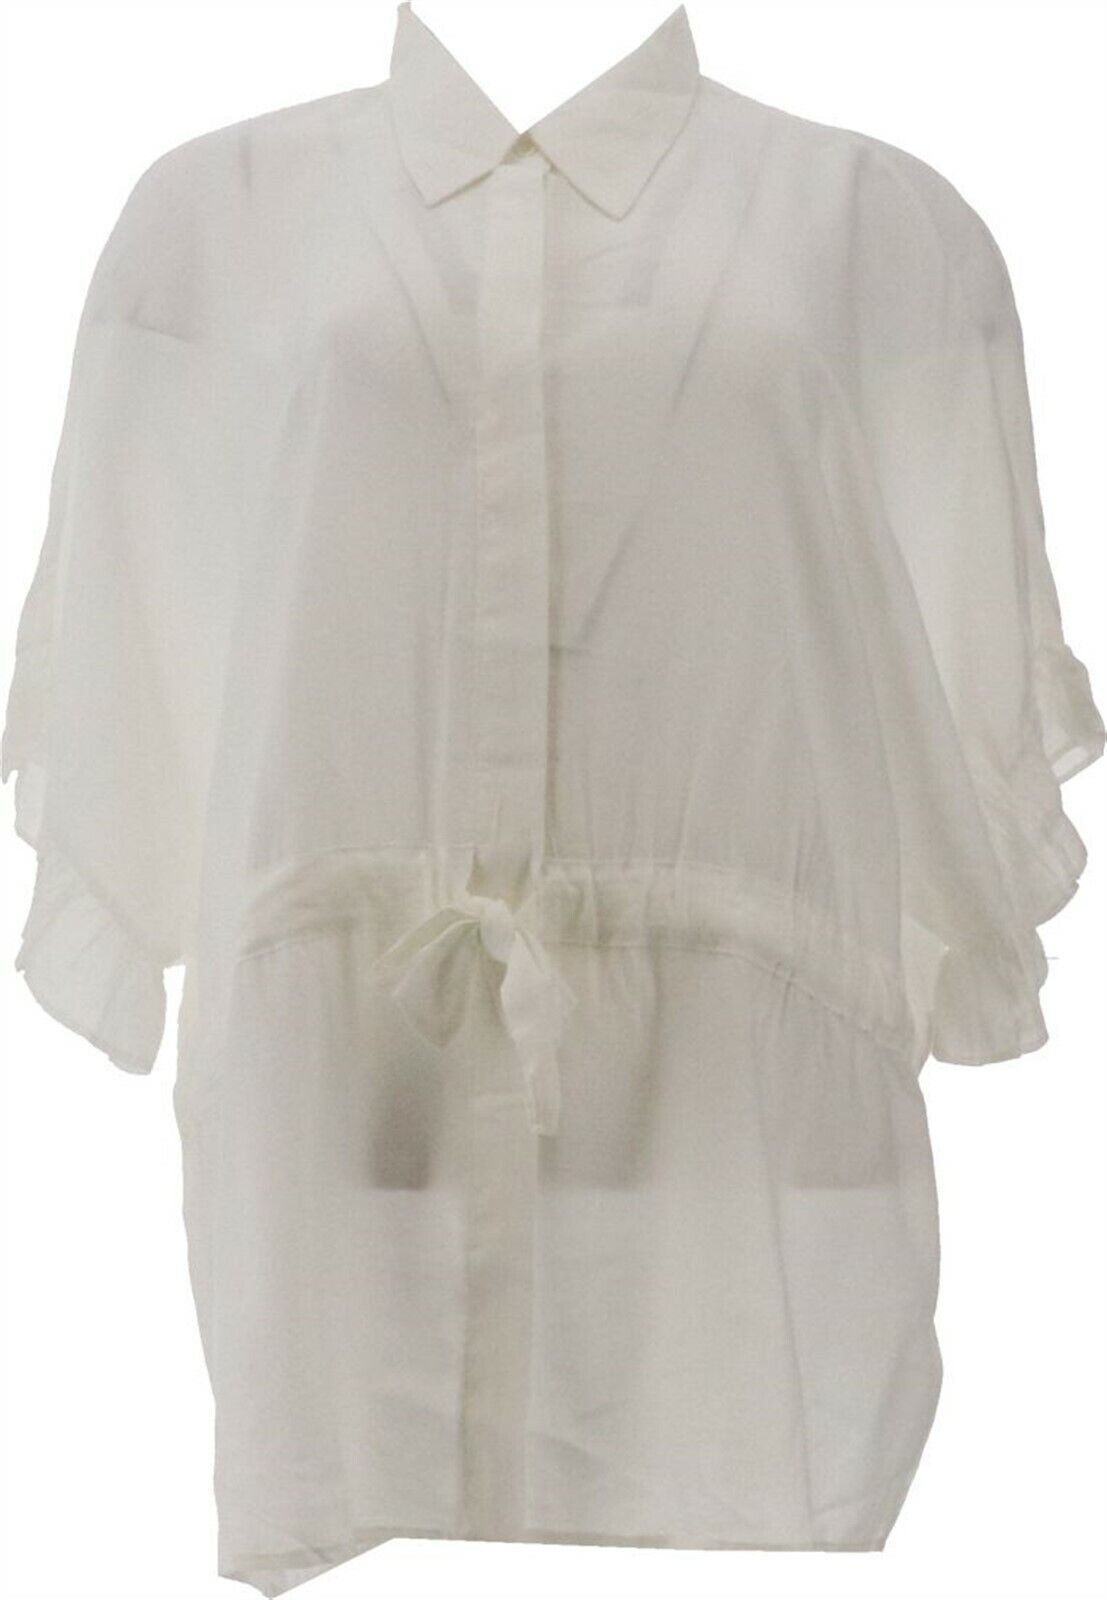 Style & Co. Women's CK Button Front Shirttail White XL NEW 732995 